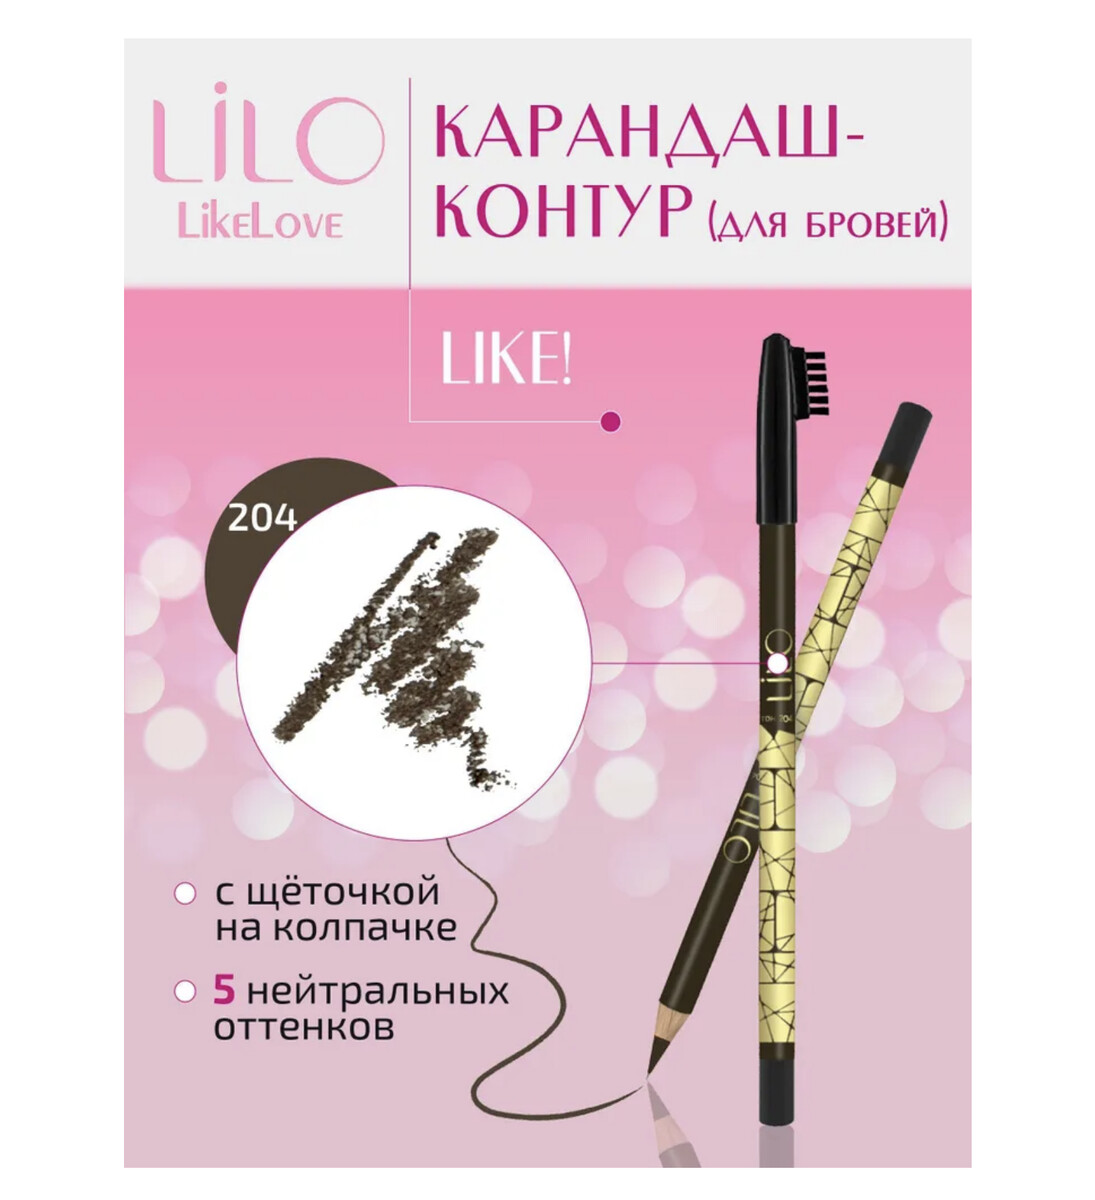 Lilo карандаш-контур для бровей lilo like тон 204 LiLo 02100075 - фото 2